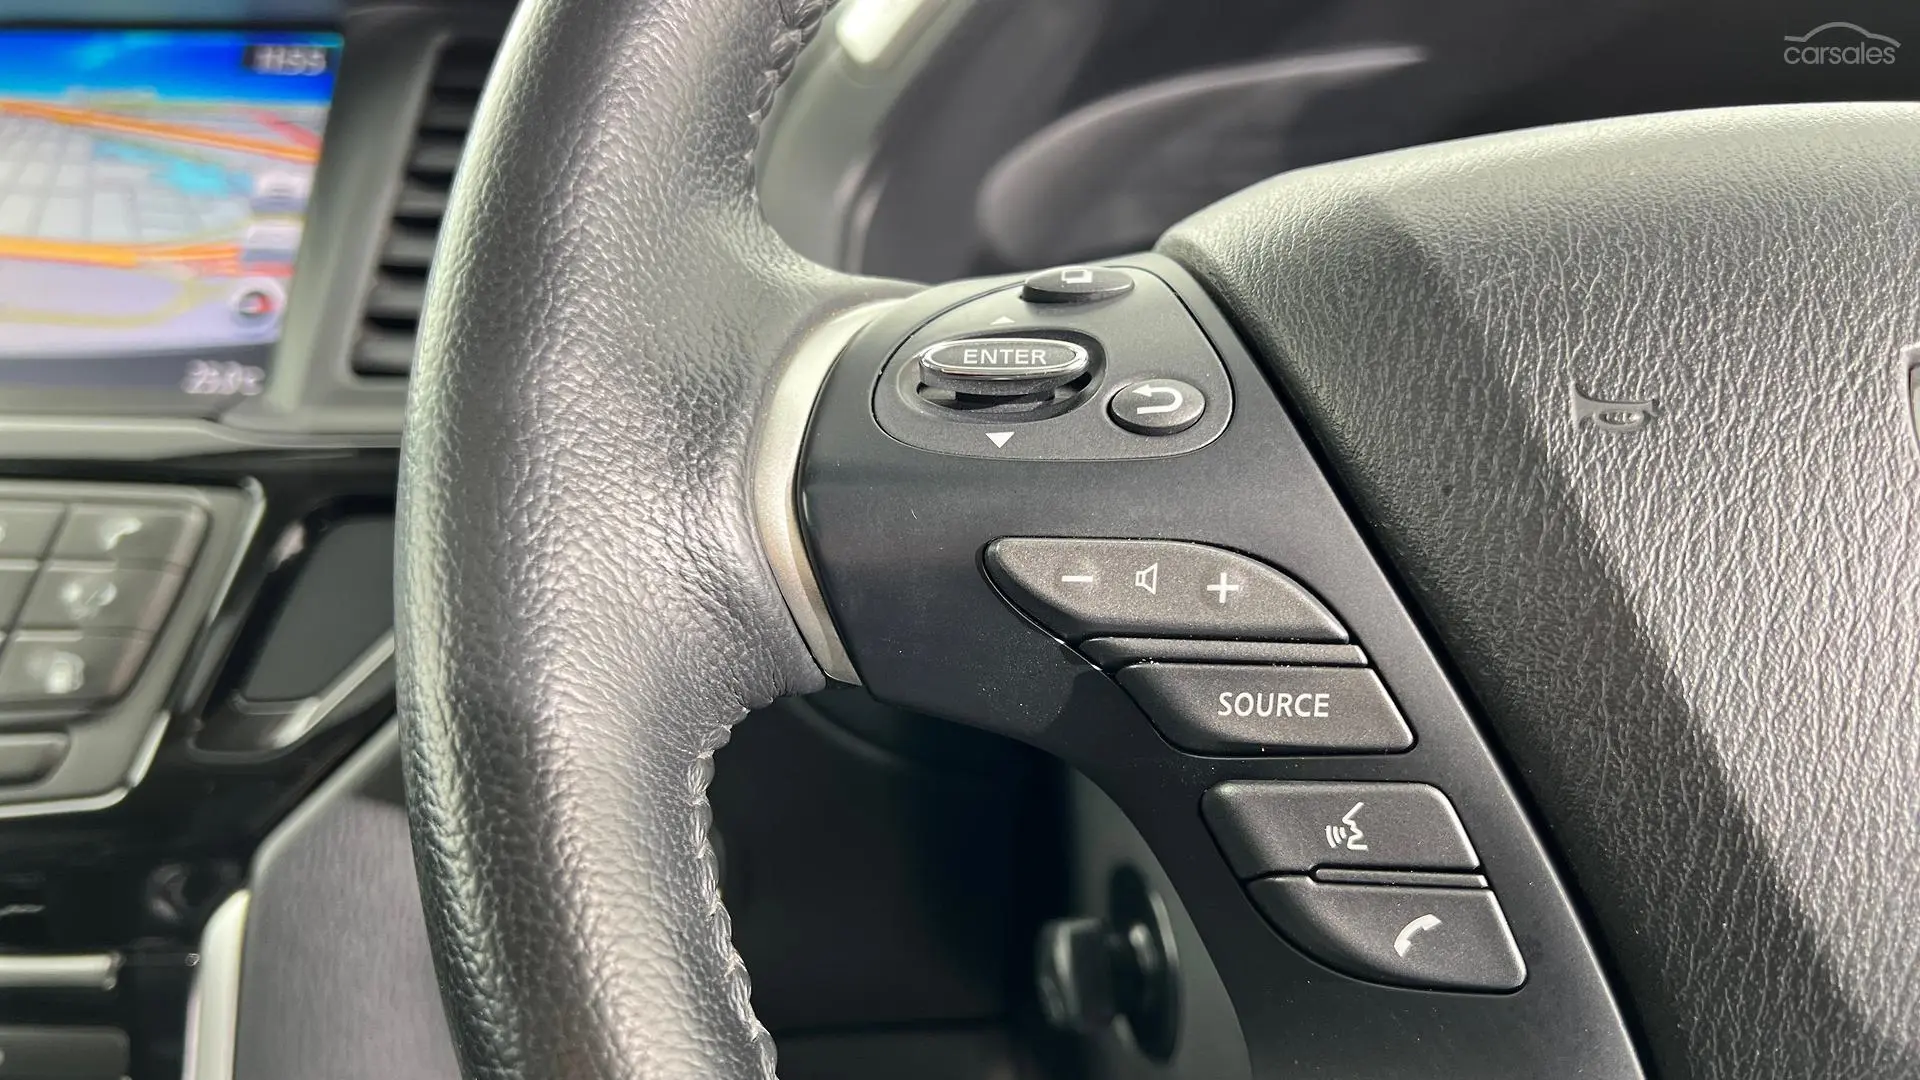 2019 Nissan Pathfinder Image 21